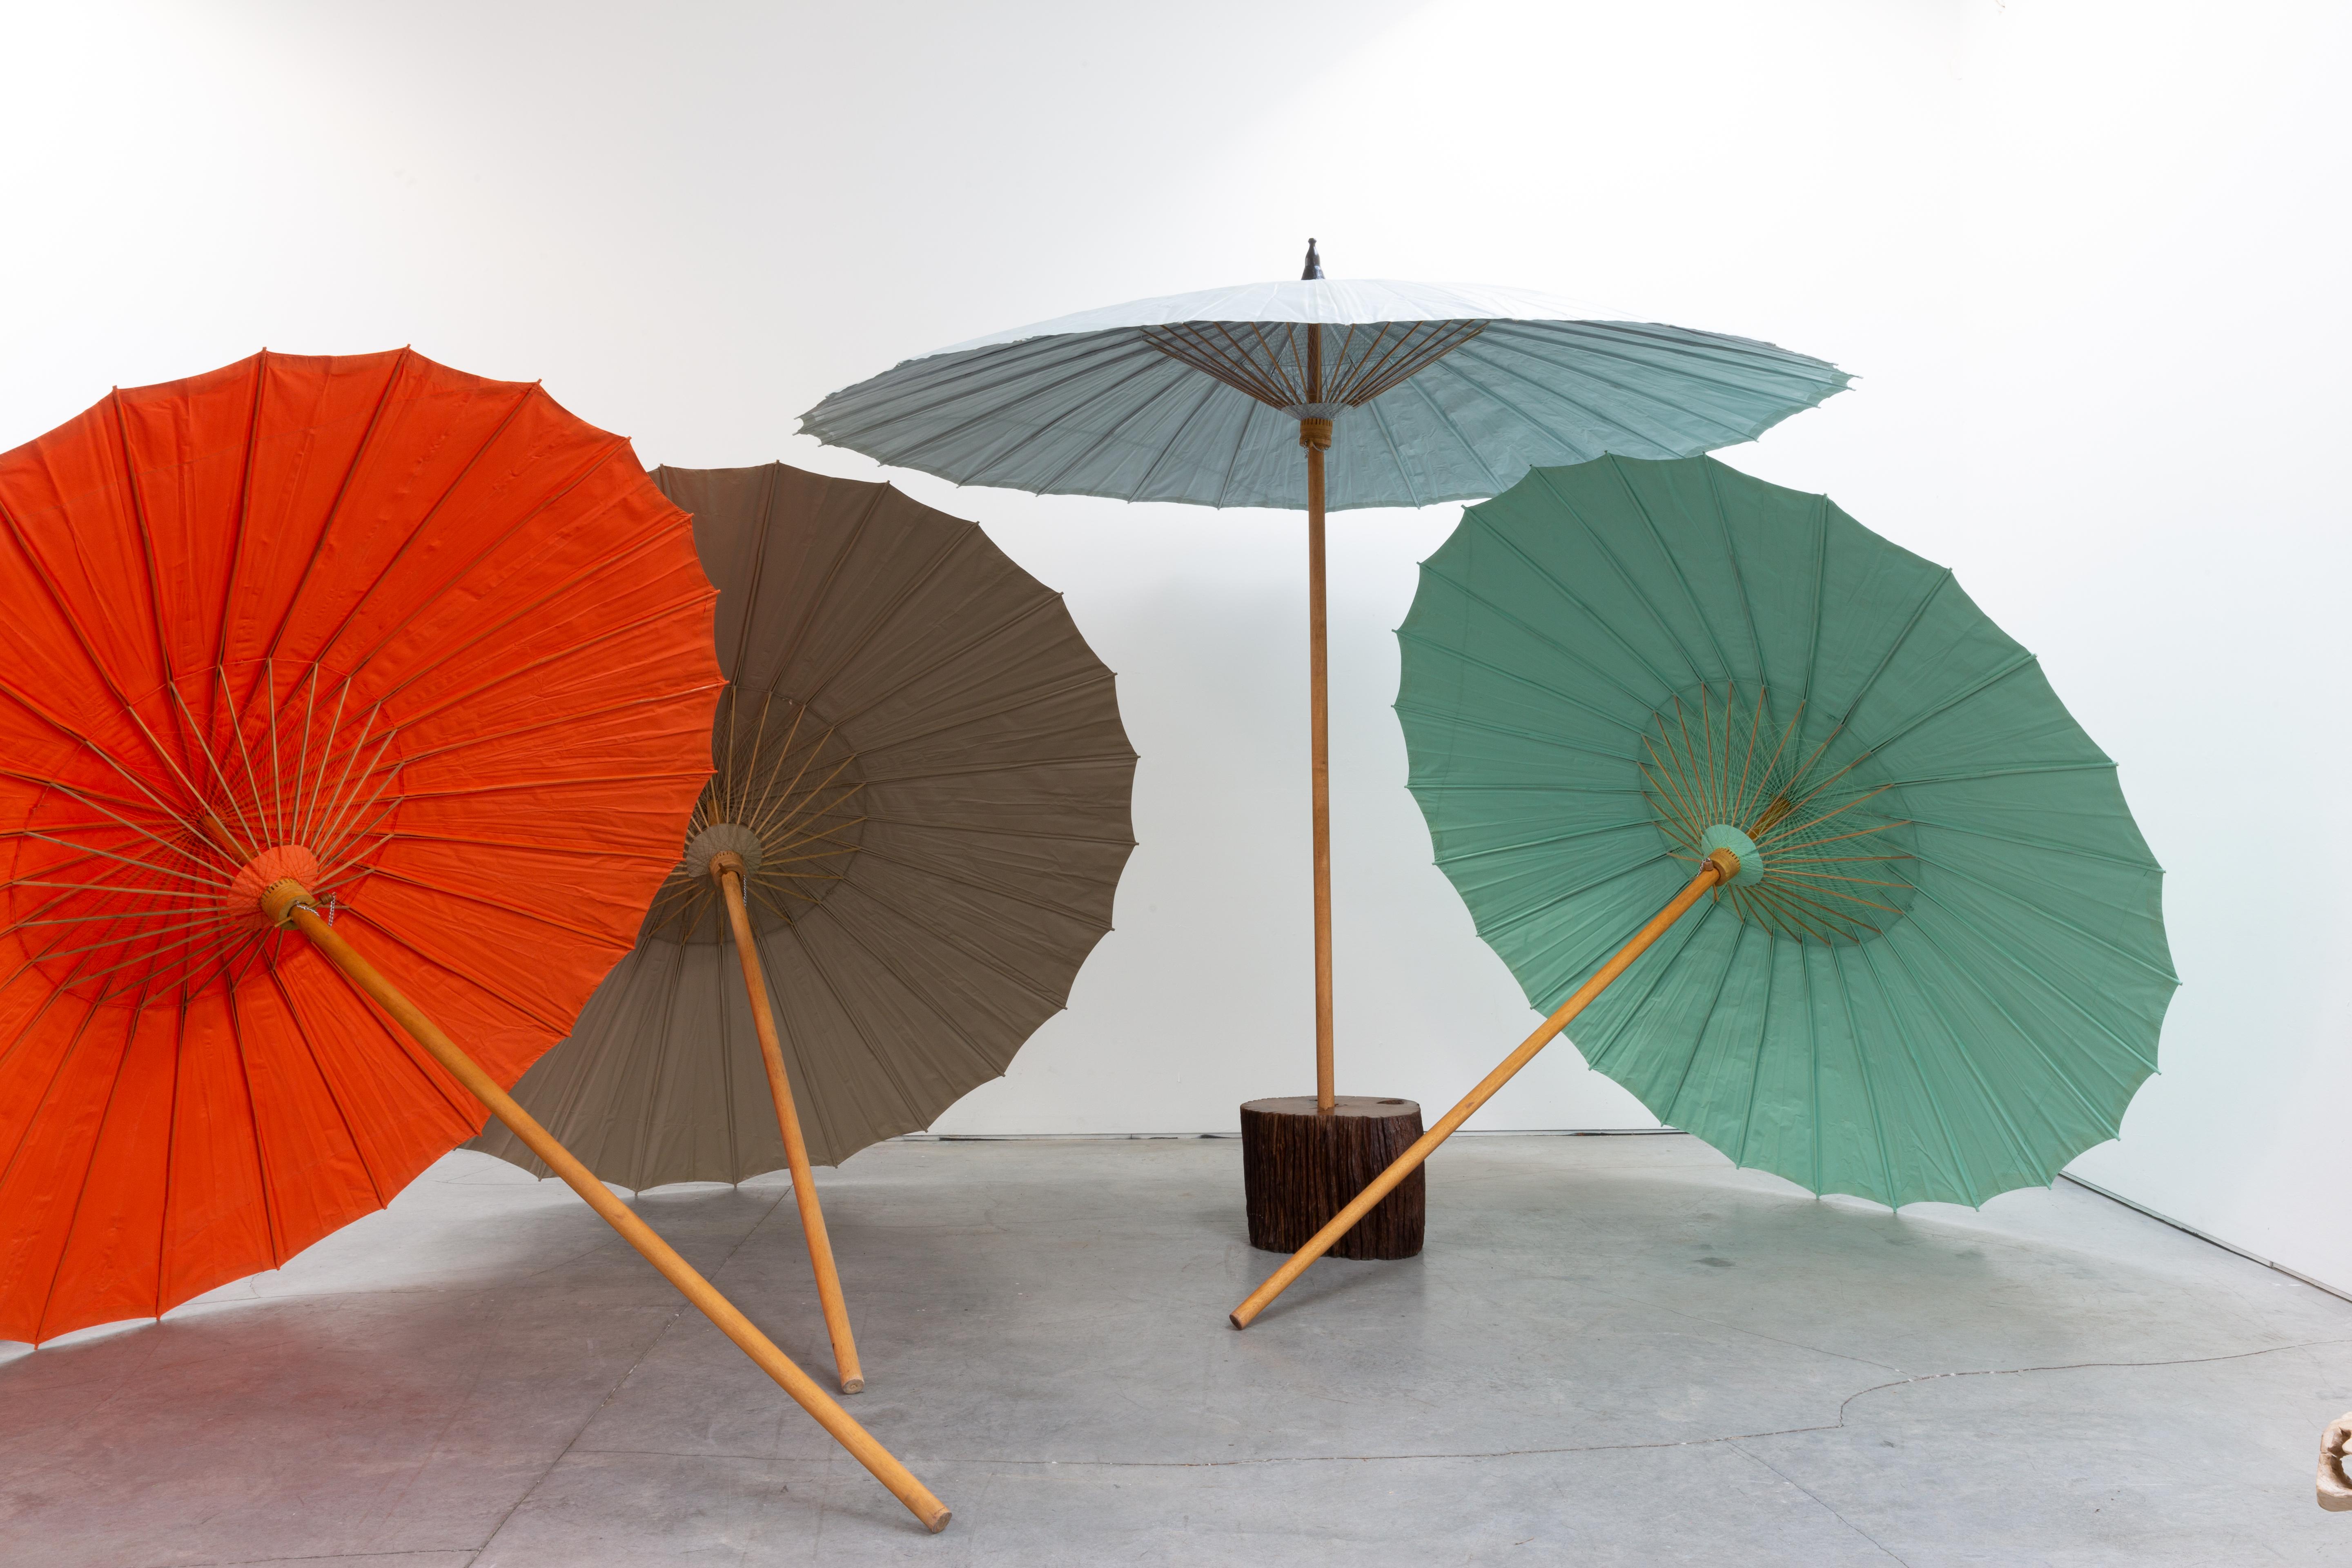 Amapola Umbrellas by CEU

Large - 118